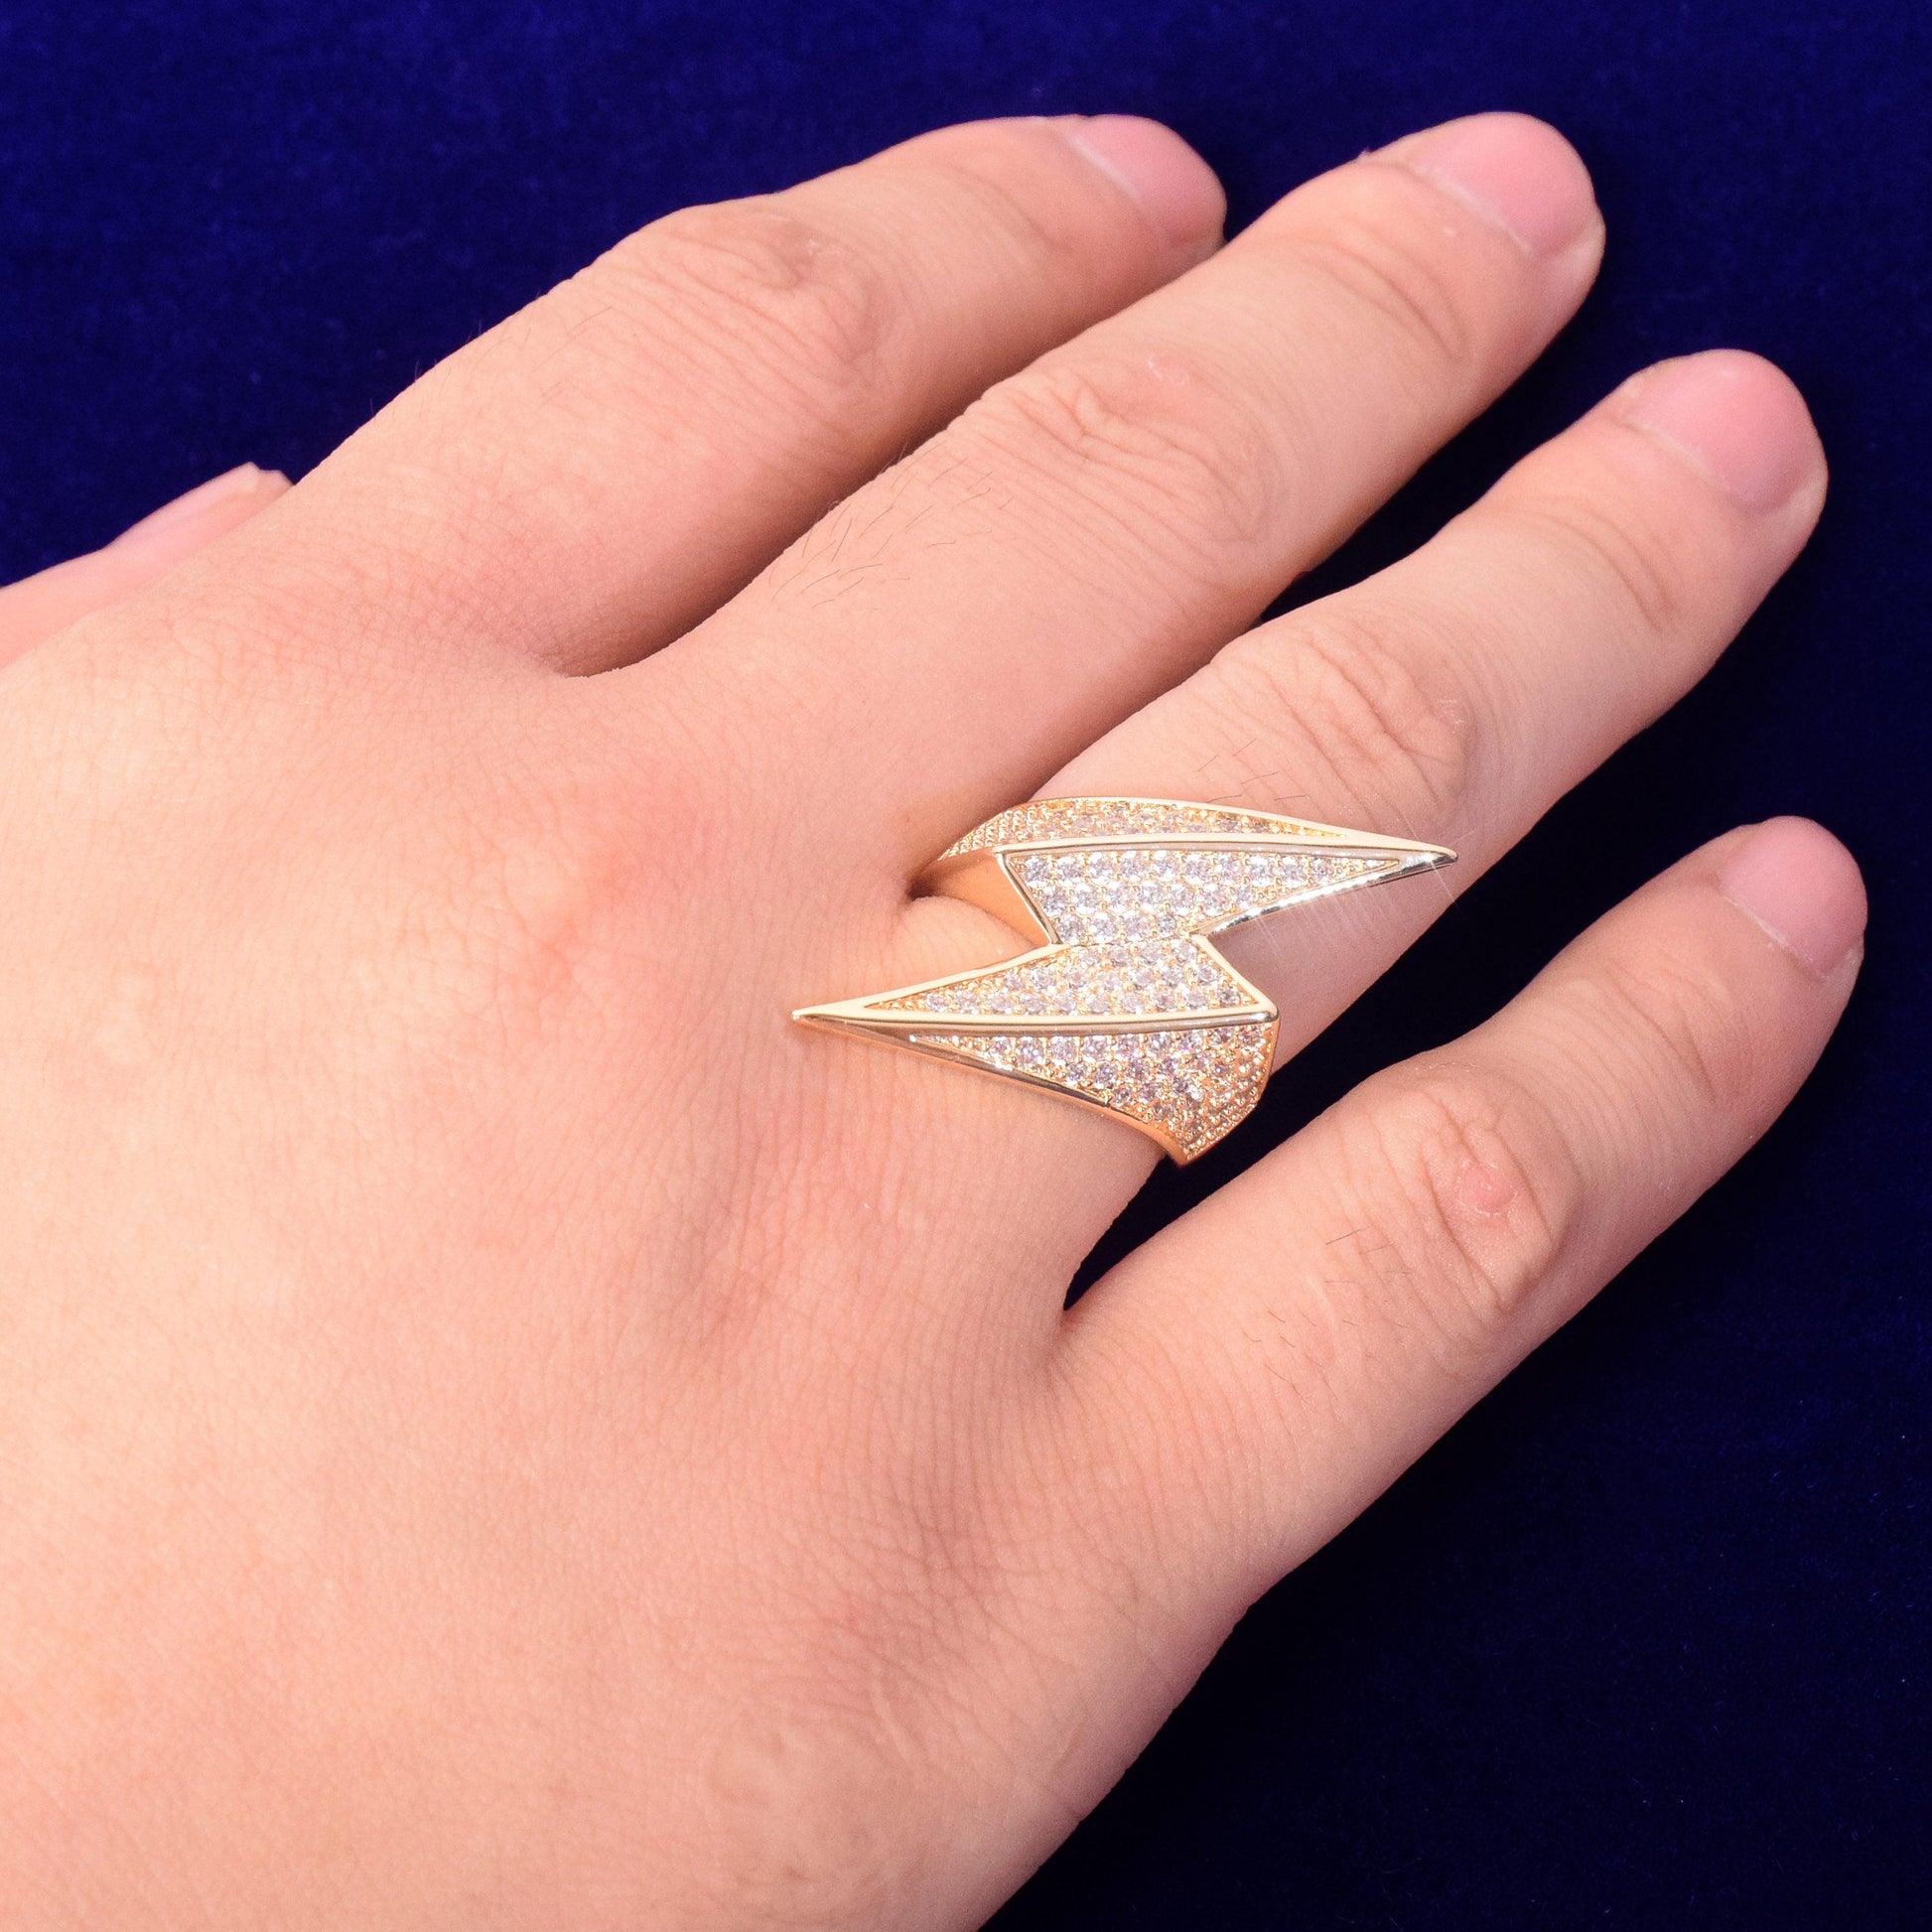 Lightning Shaped Men's Ring - Gold Color Charm Cubic Zirconia Fashion Ring (2U83)